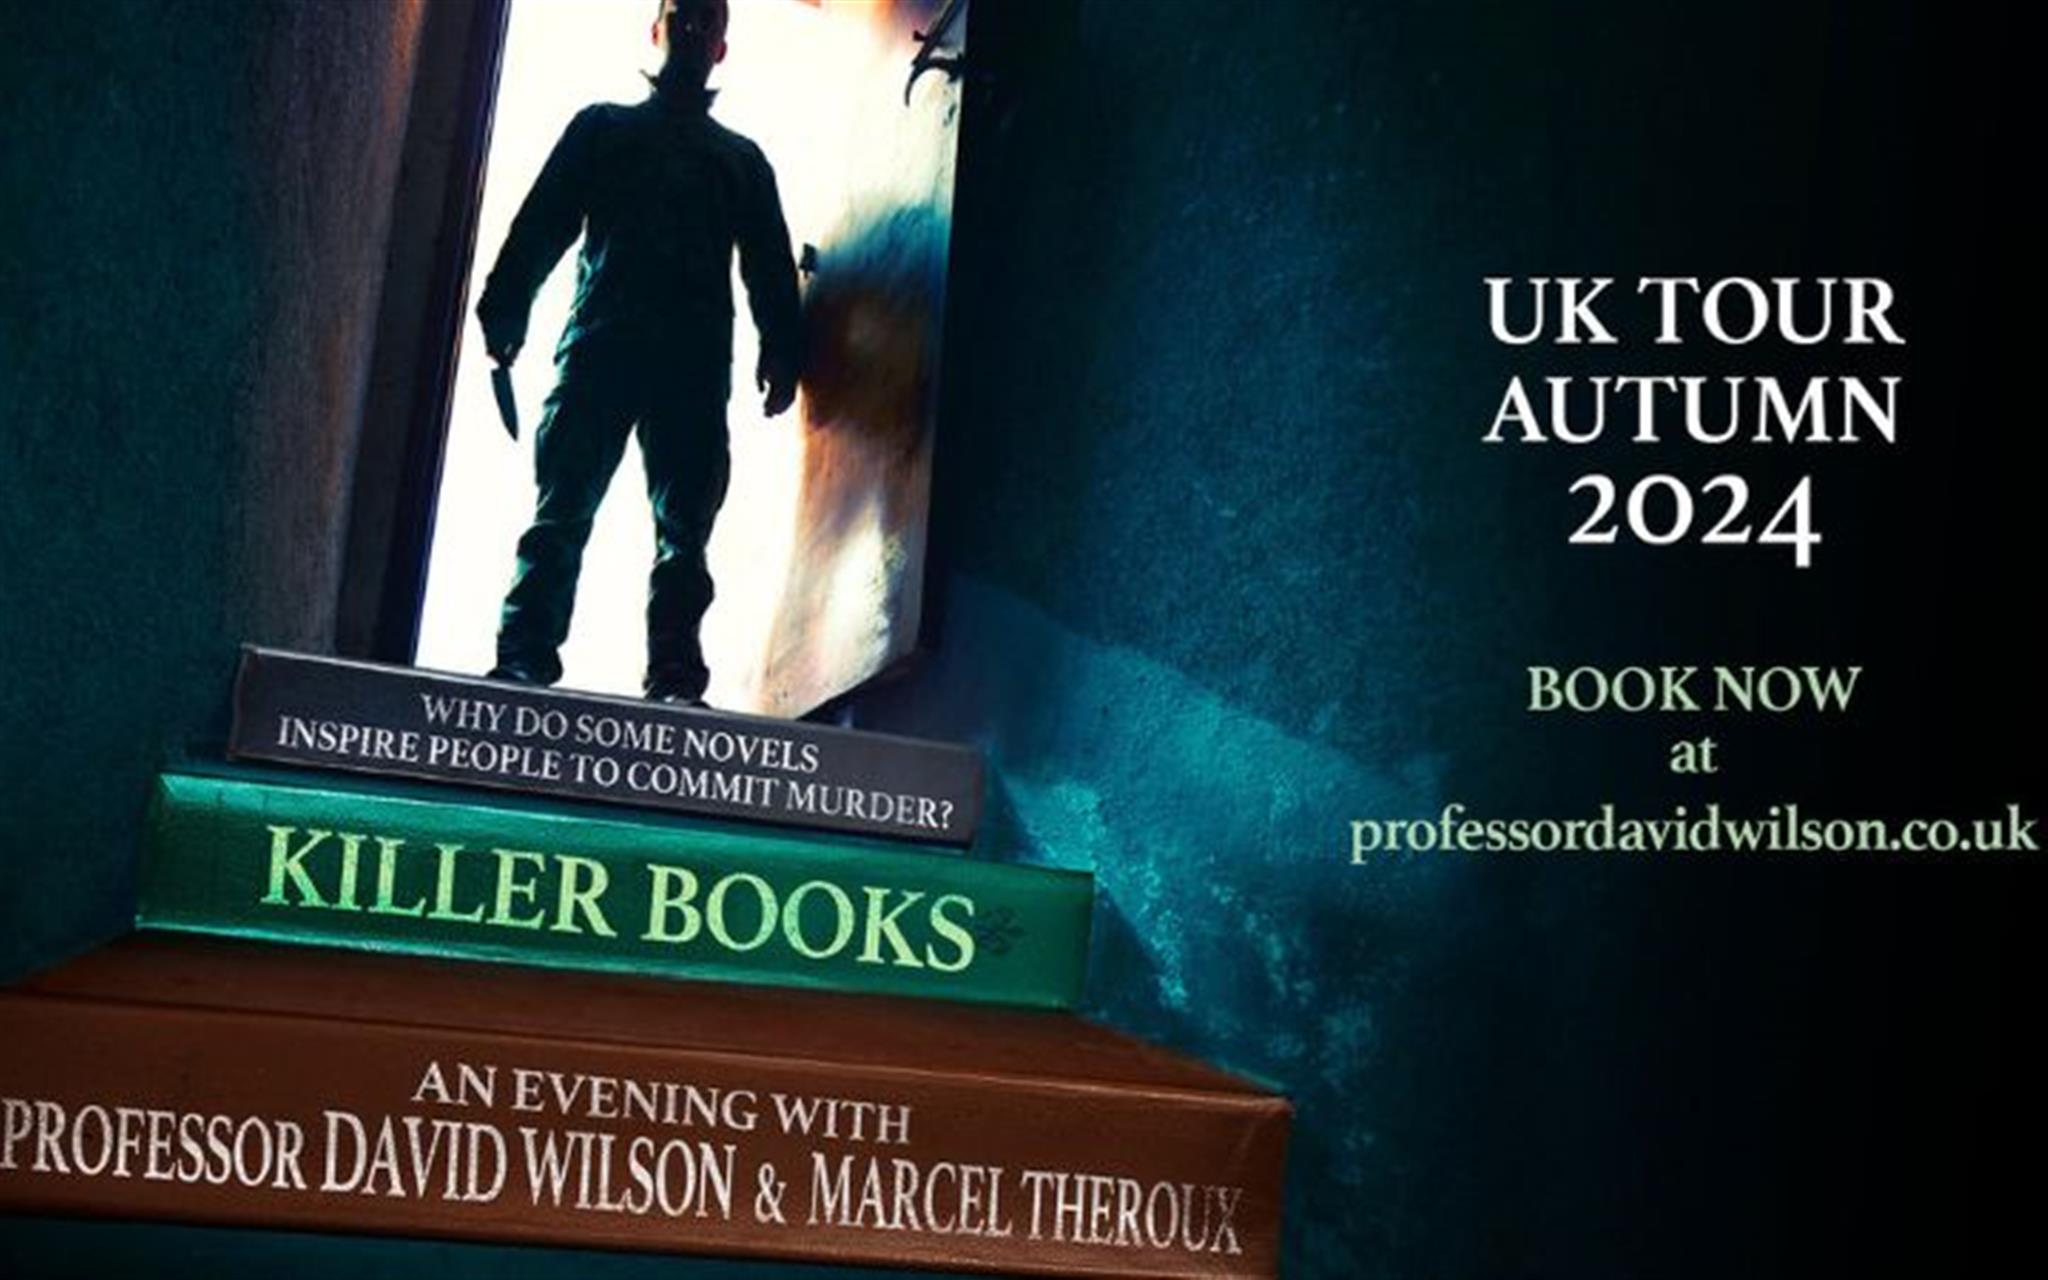 Professor David Wilson & Marcel Theroux - Killer Books